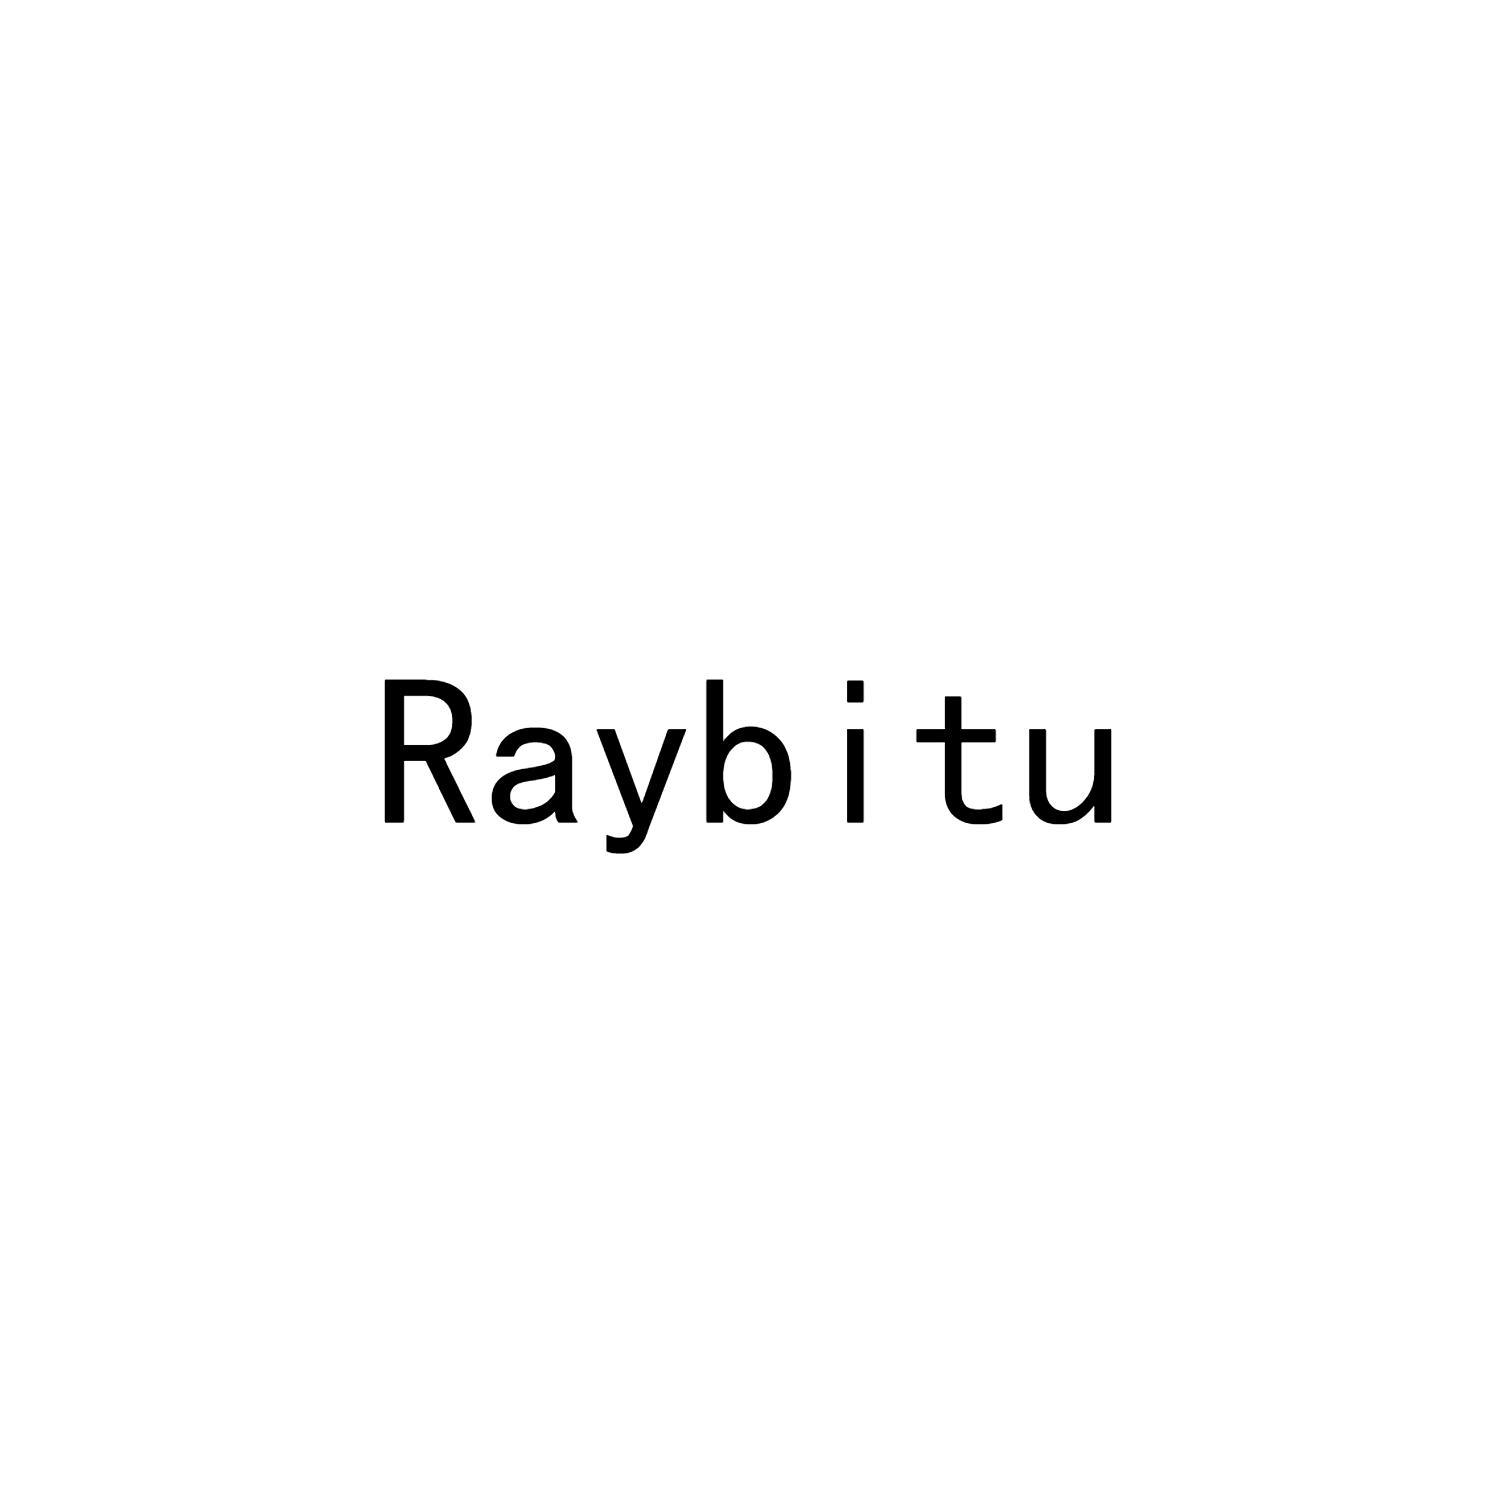 RAYBITU商标转让